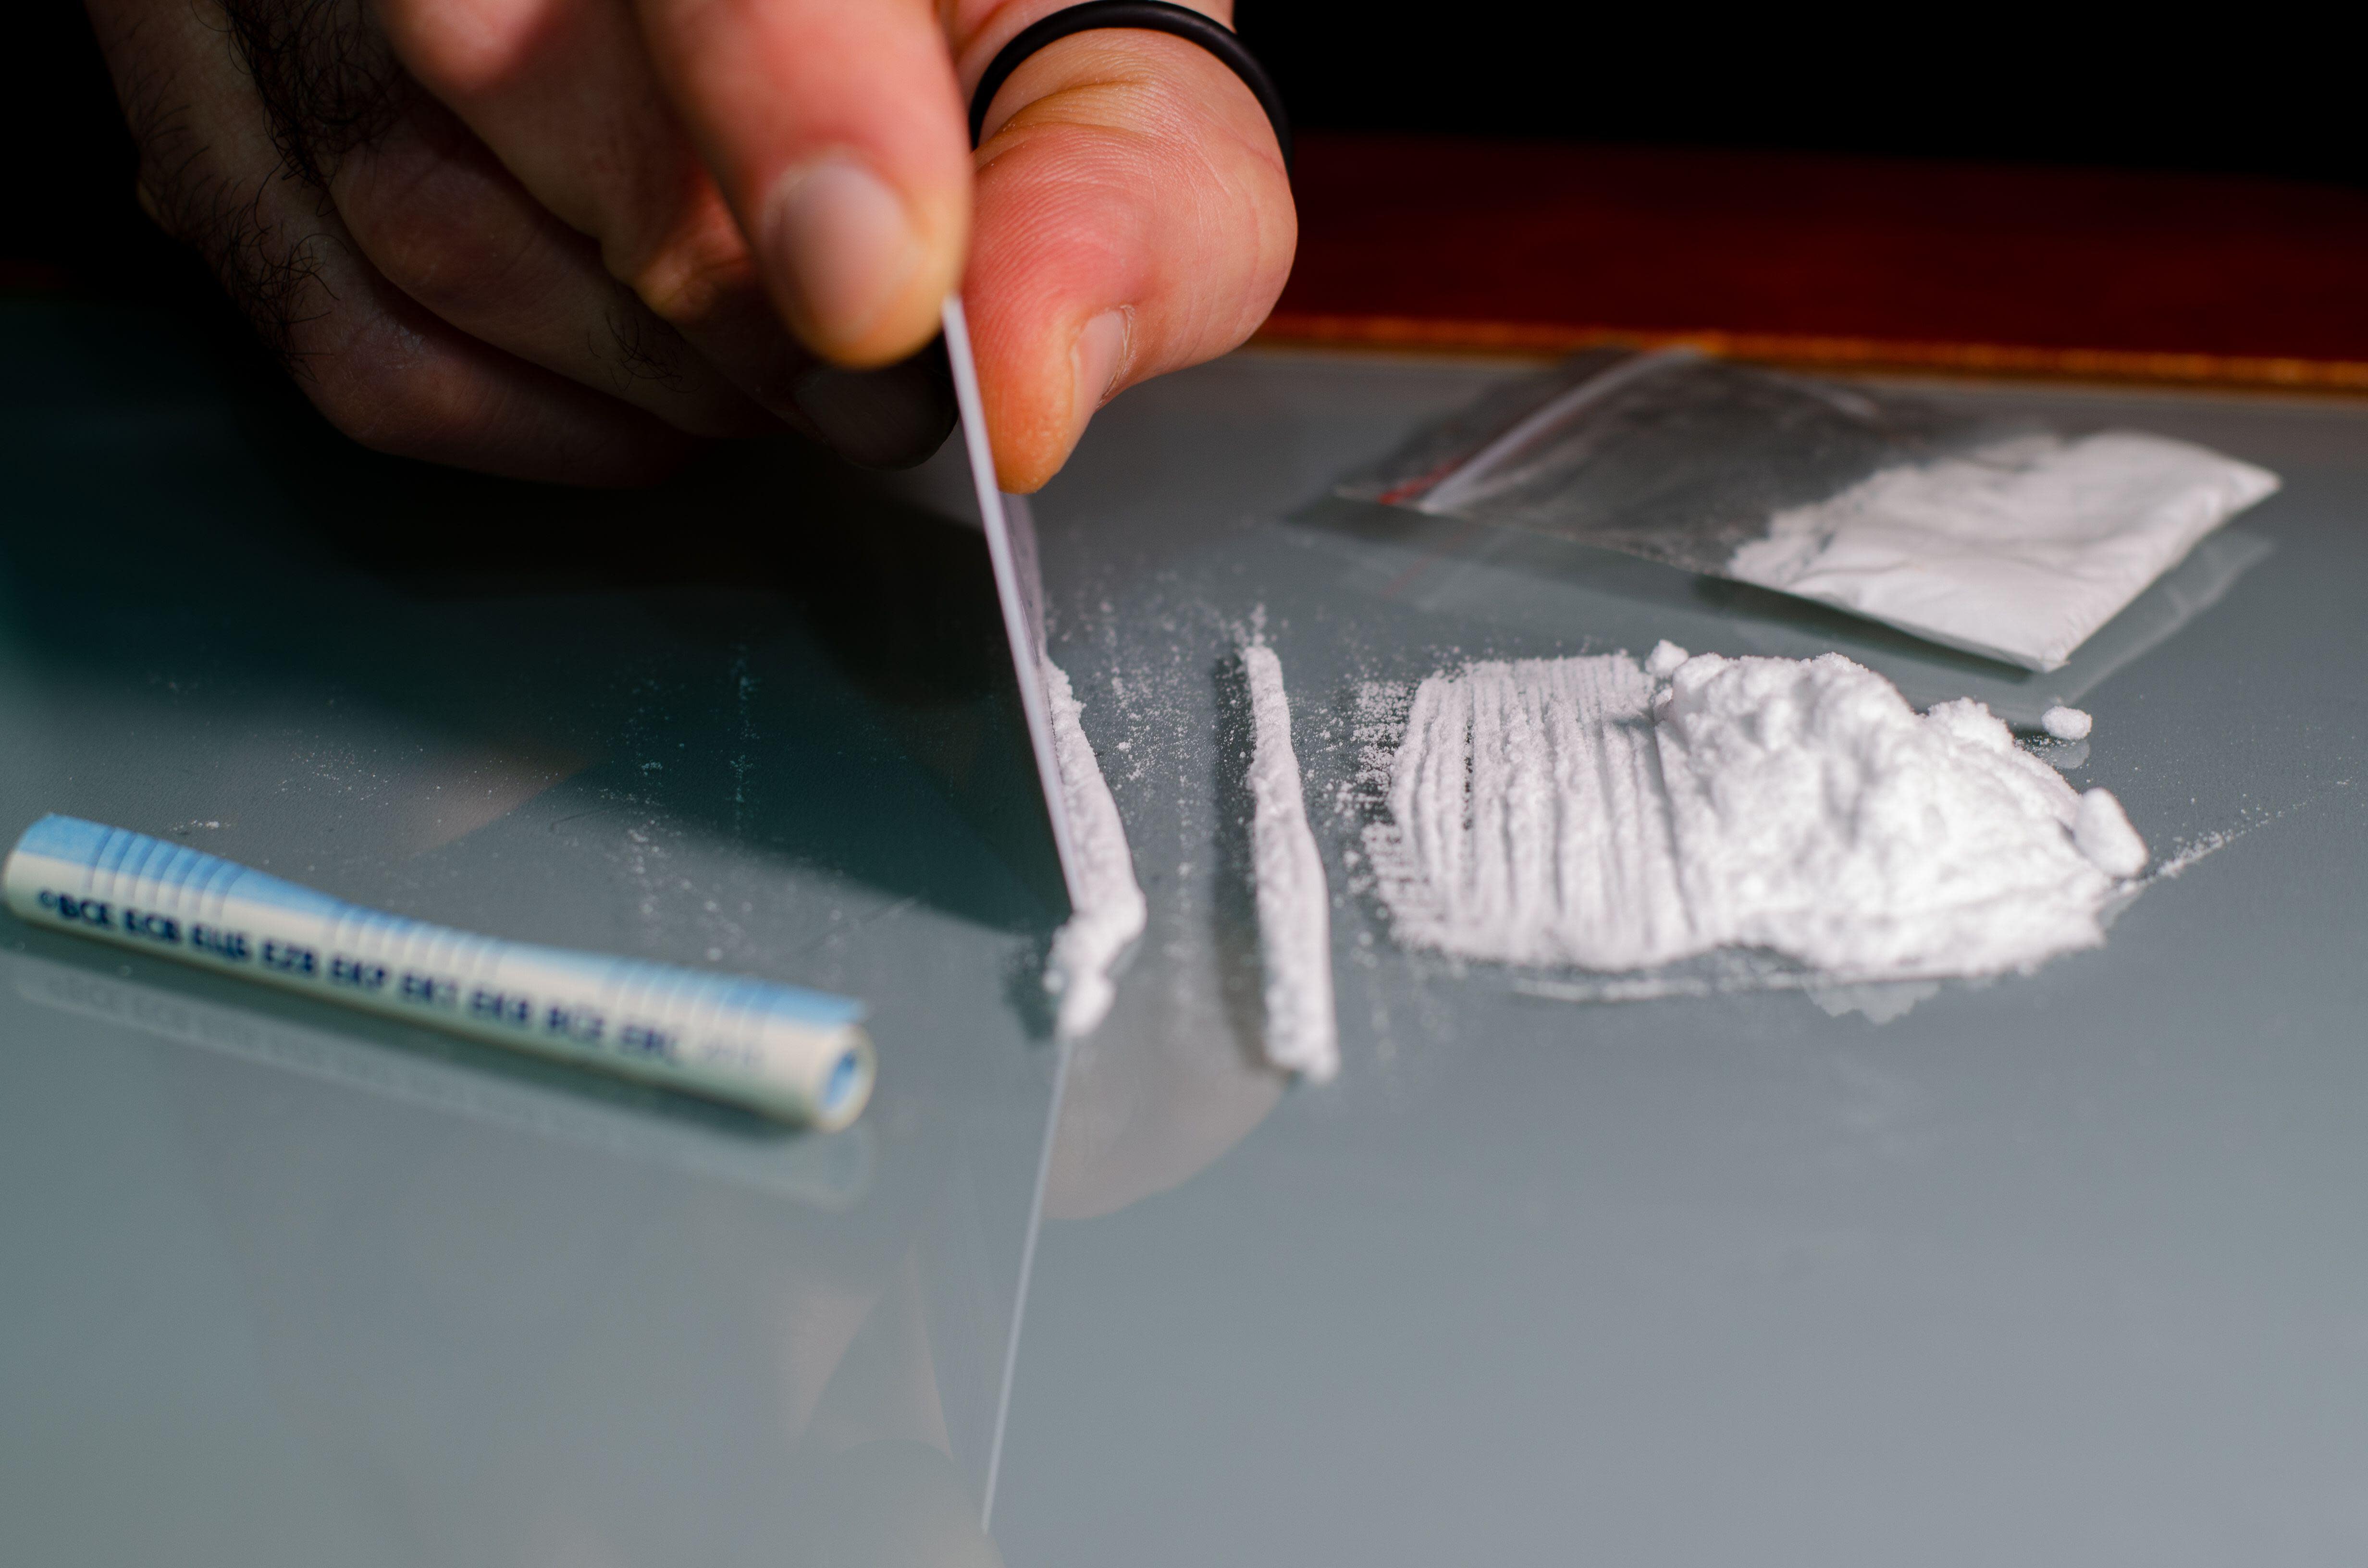 Ujian air sisa menunjukkan bahawa kebanyakan penggunaan kokain Finland adalah di wilayah ibu kota